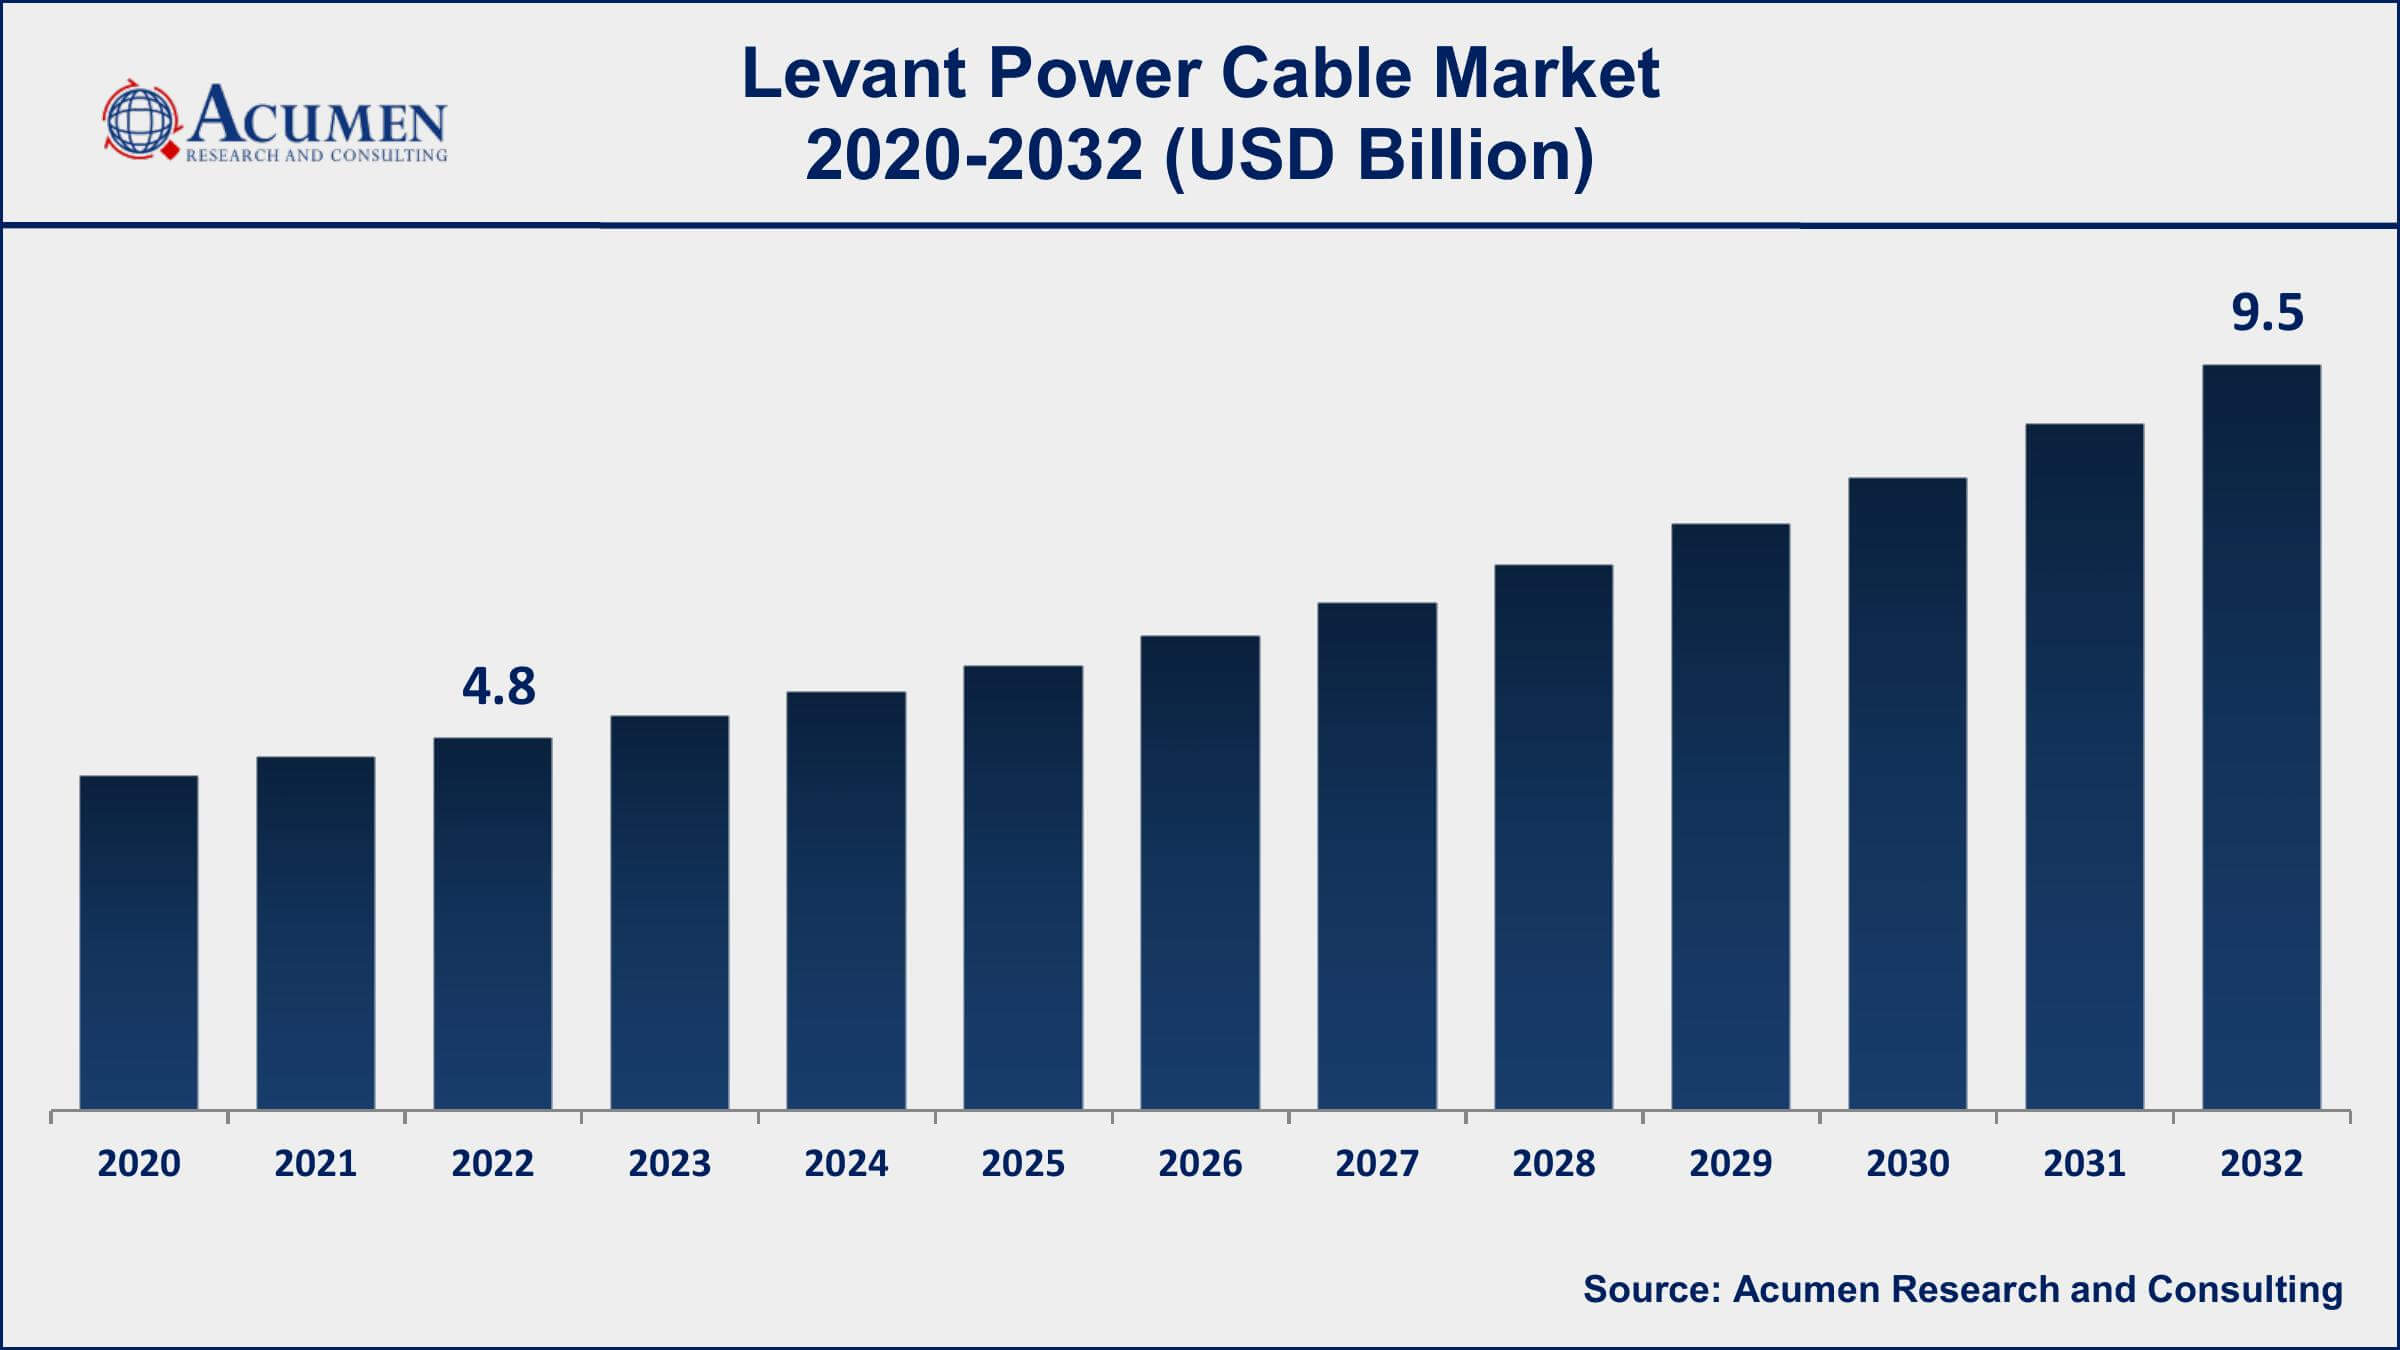 Levant Power Cable Market Drivers